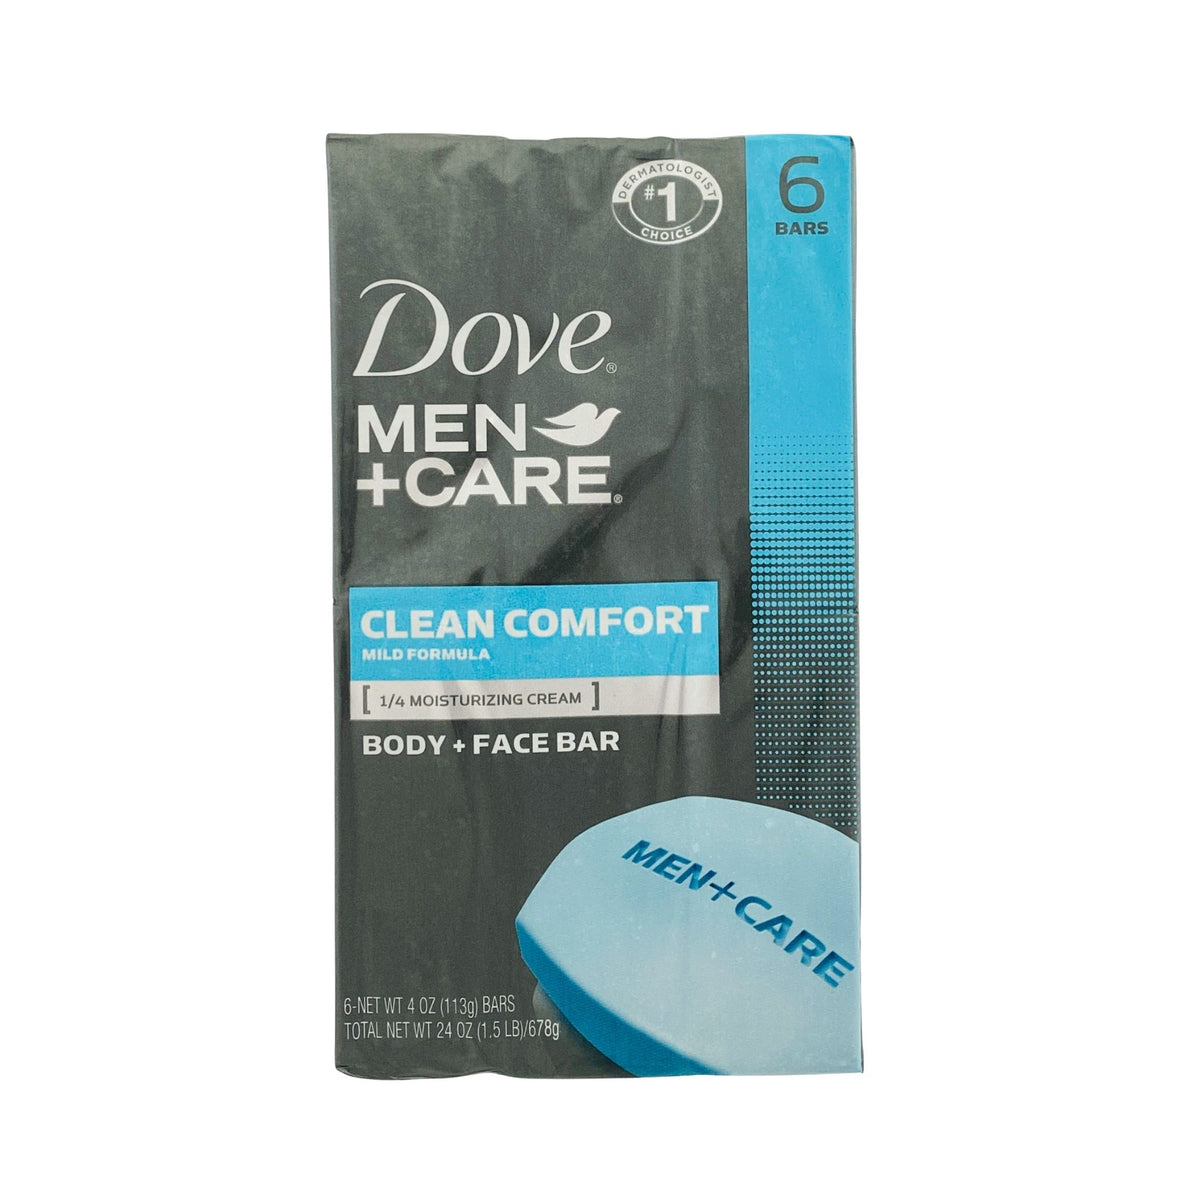 Dove Men+Care Deep Clean Body & Face Bar Soap 2-4 Oz Bars